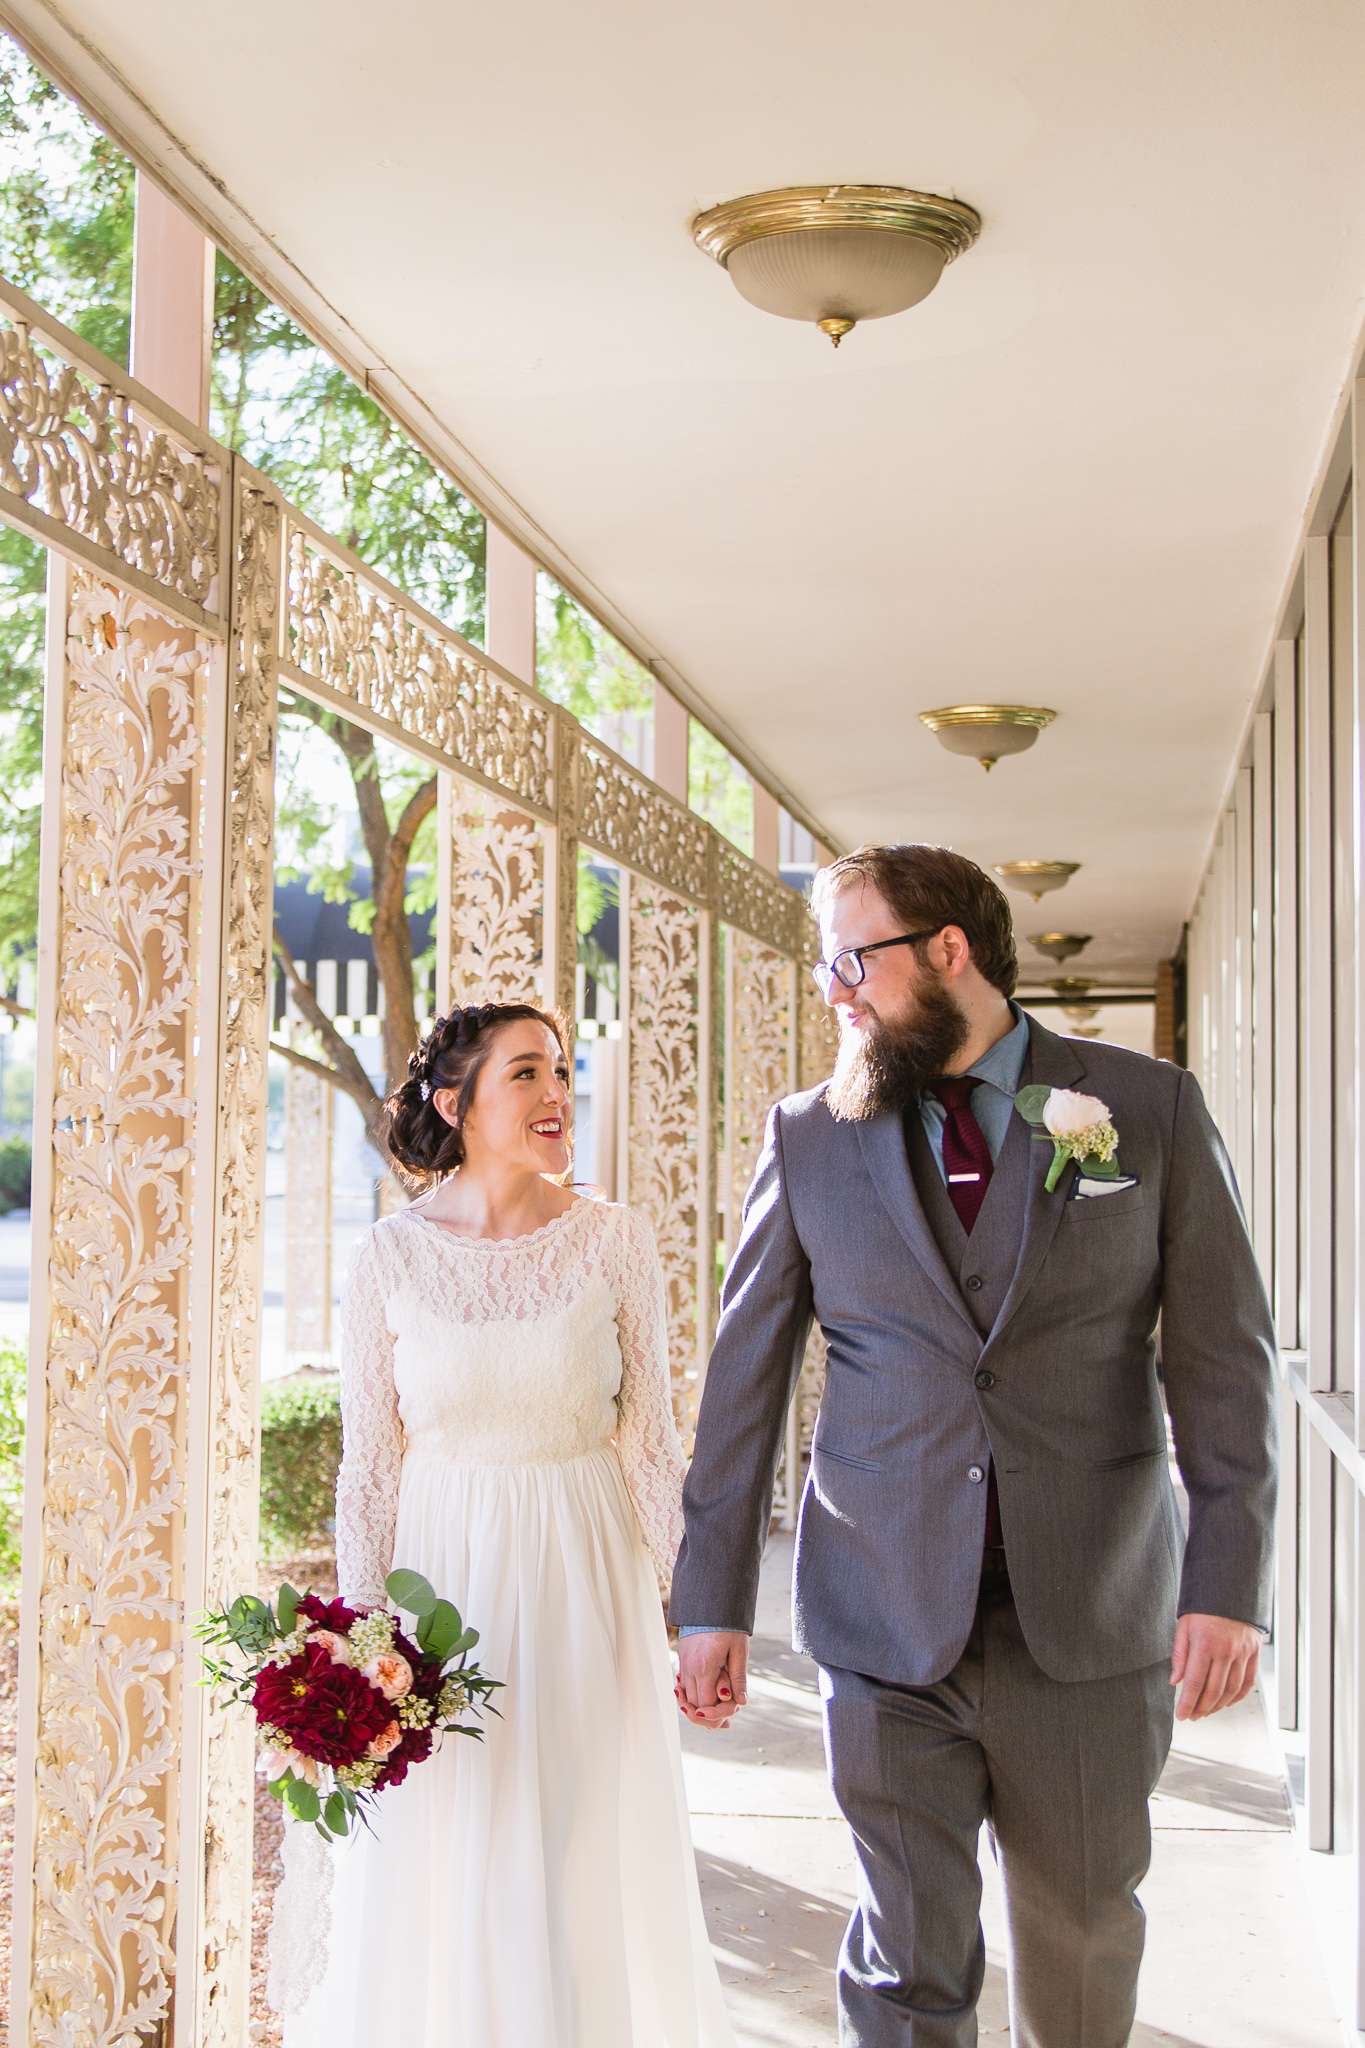 Vintage inspired bride and groom in vintage walkway for their burgundy and cream wedding in downtown Phoenix.